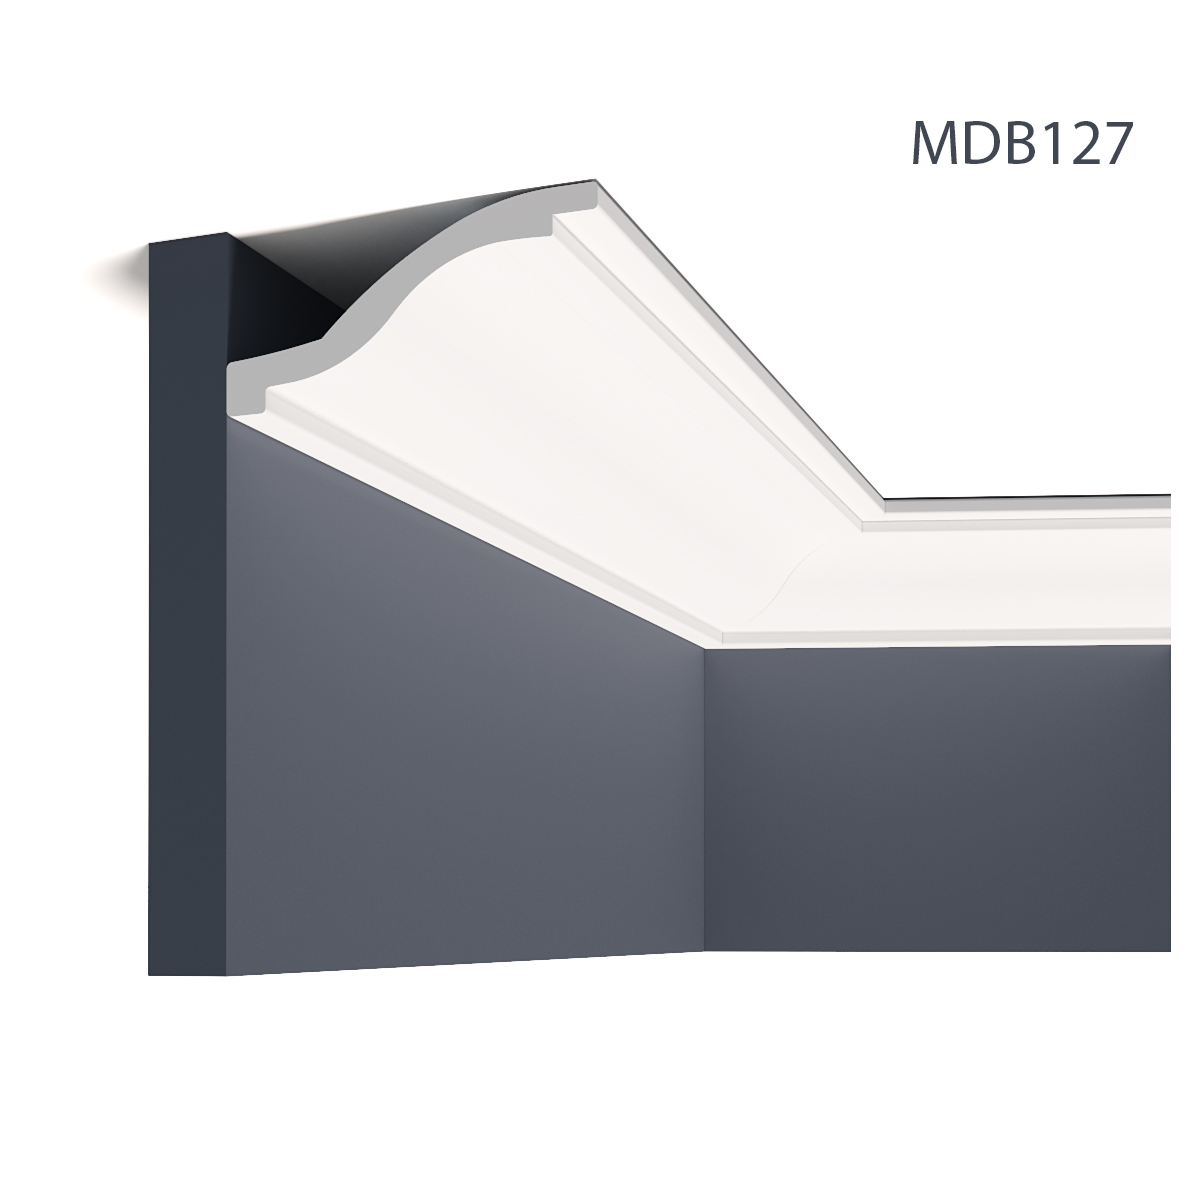 Cornișe tavan Mardom Decor MRD-MDB127, material: ProFoam